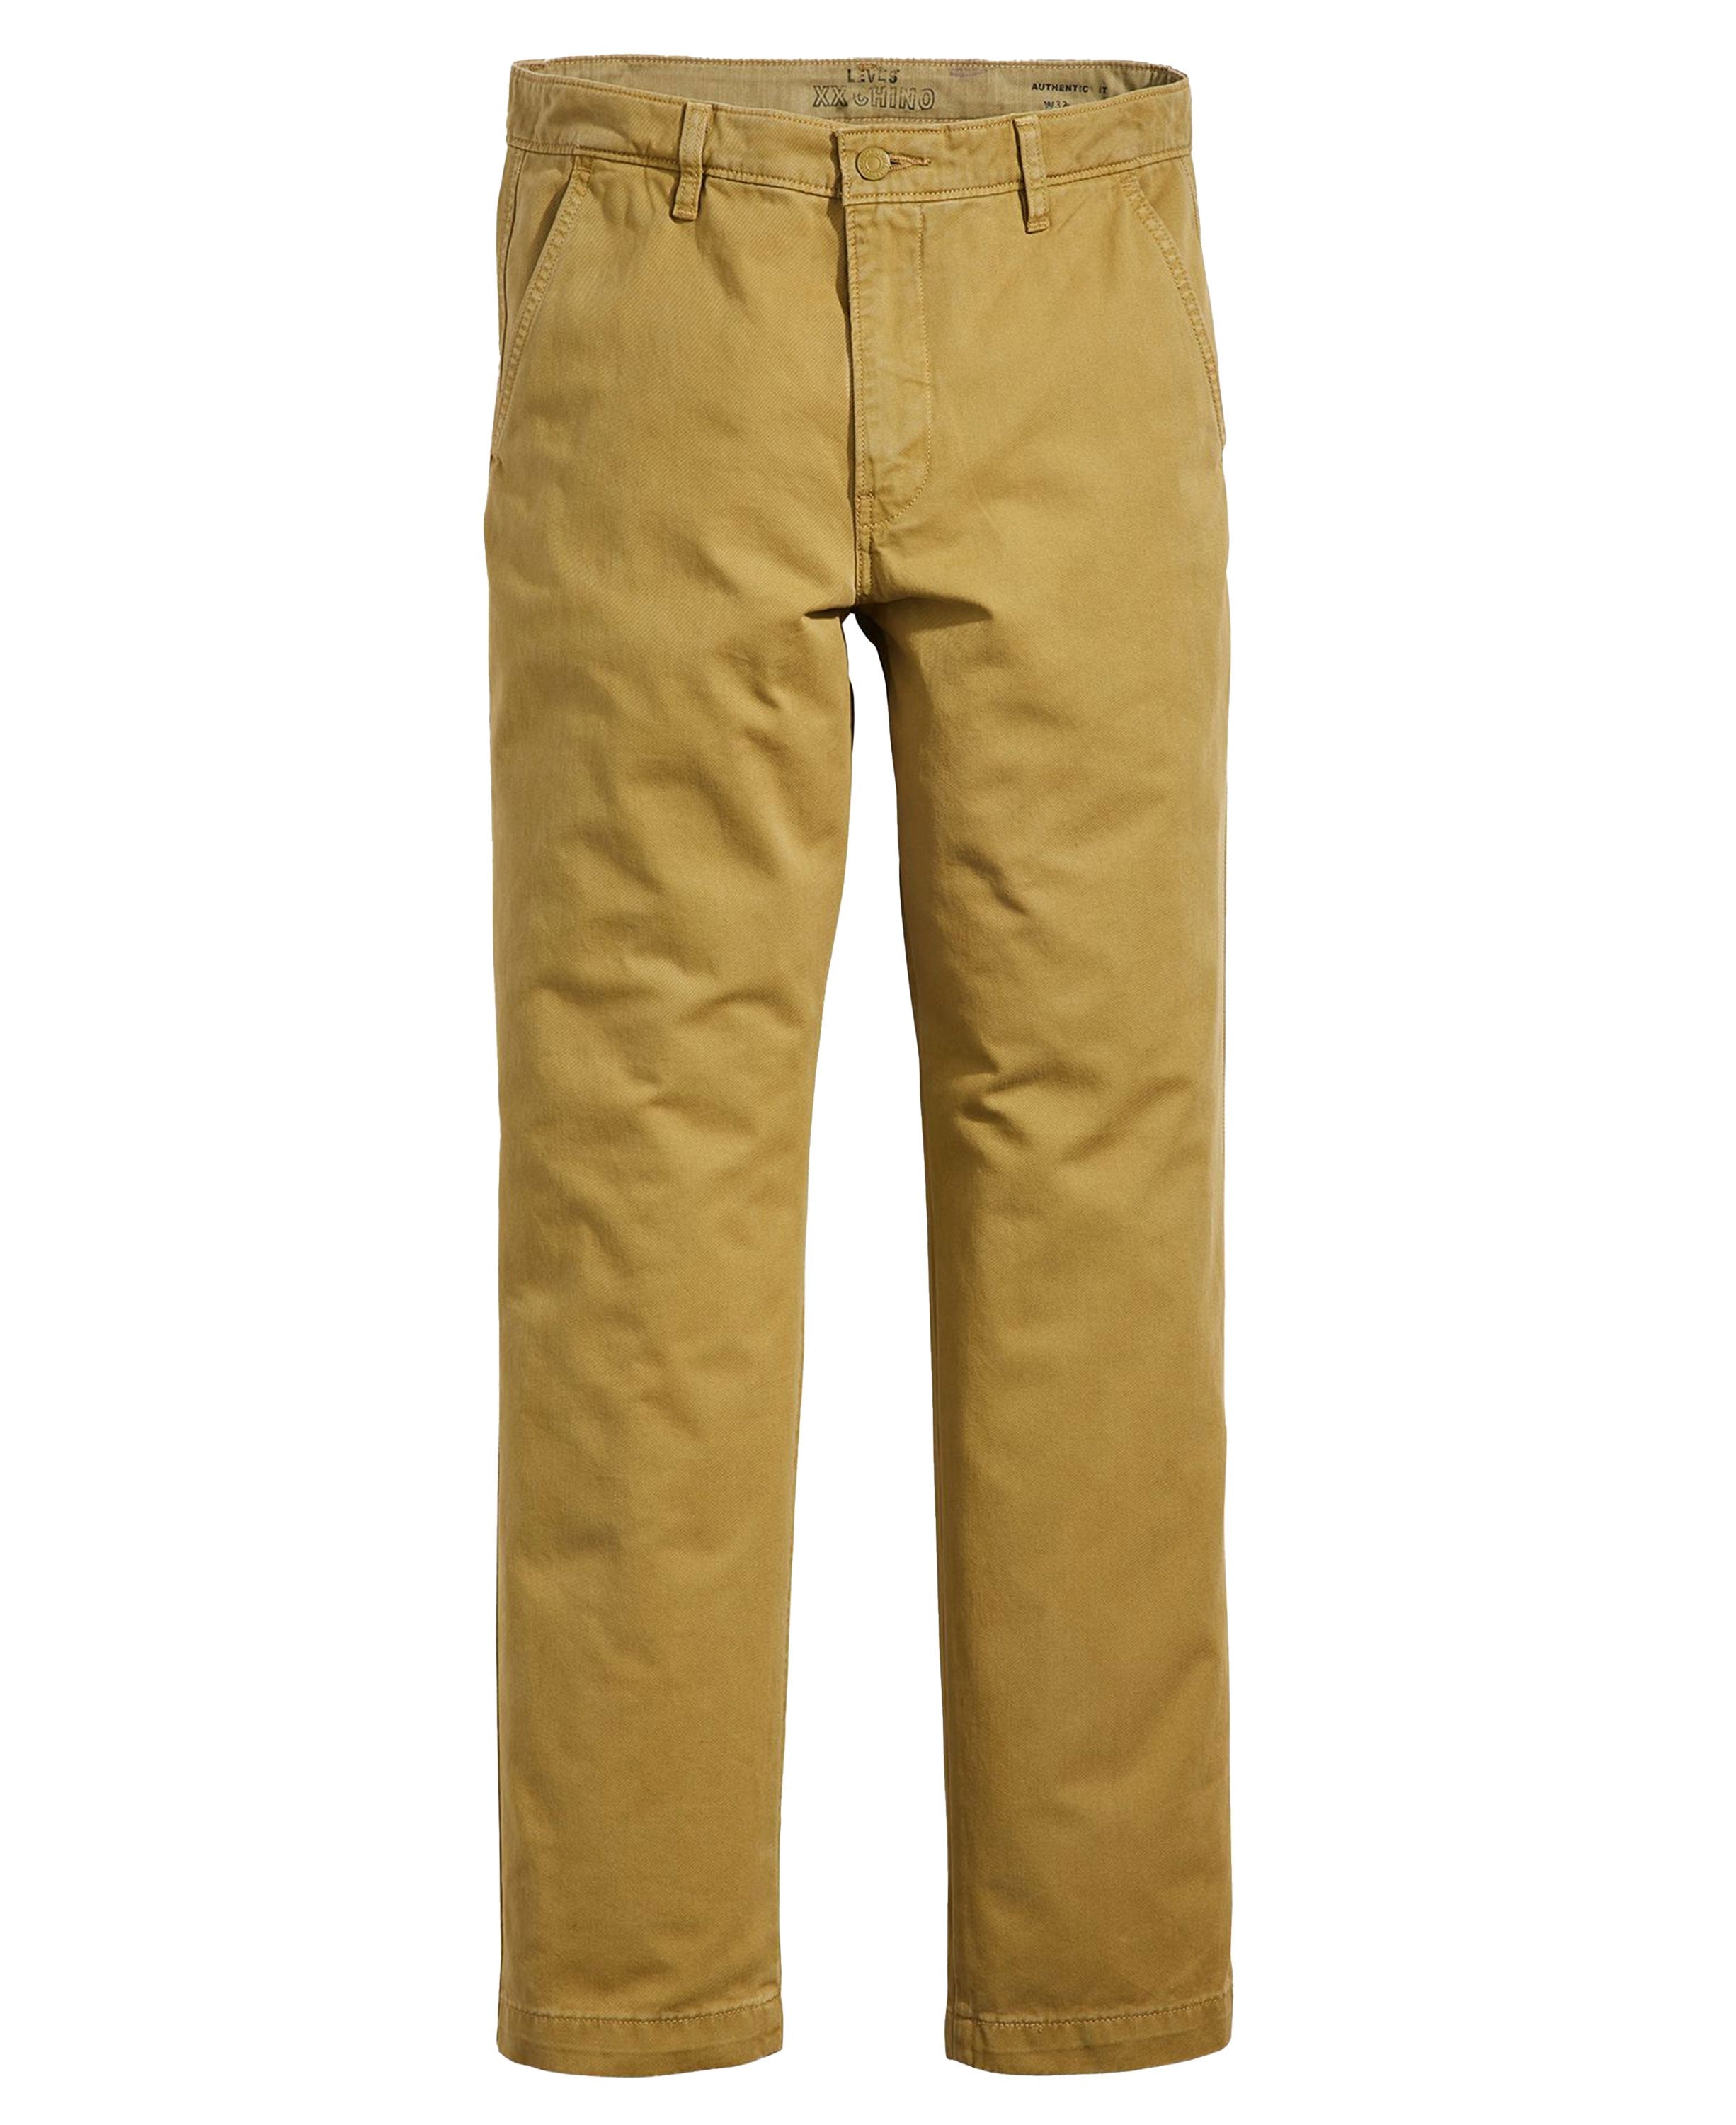 XX Chino Authentic Straight Pants - British Khaki Soft Garment Dye